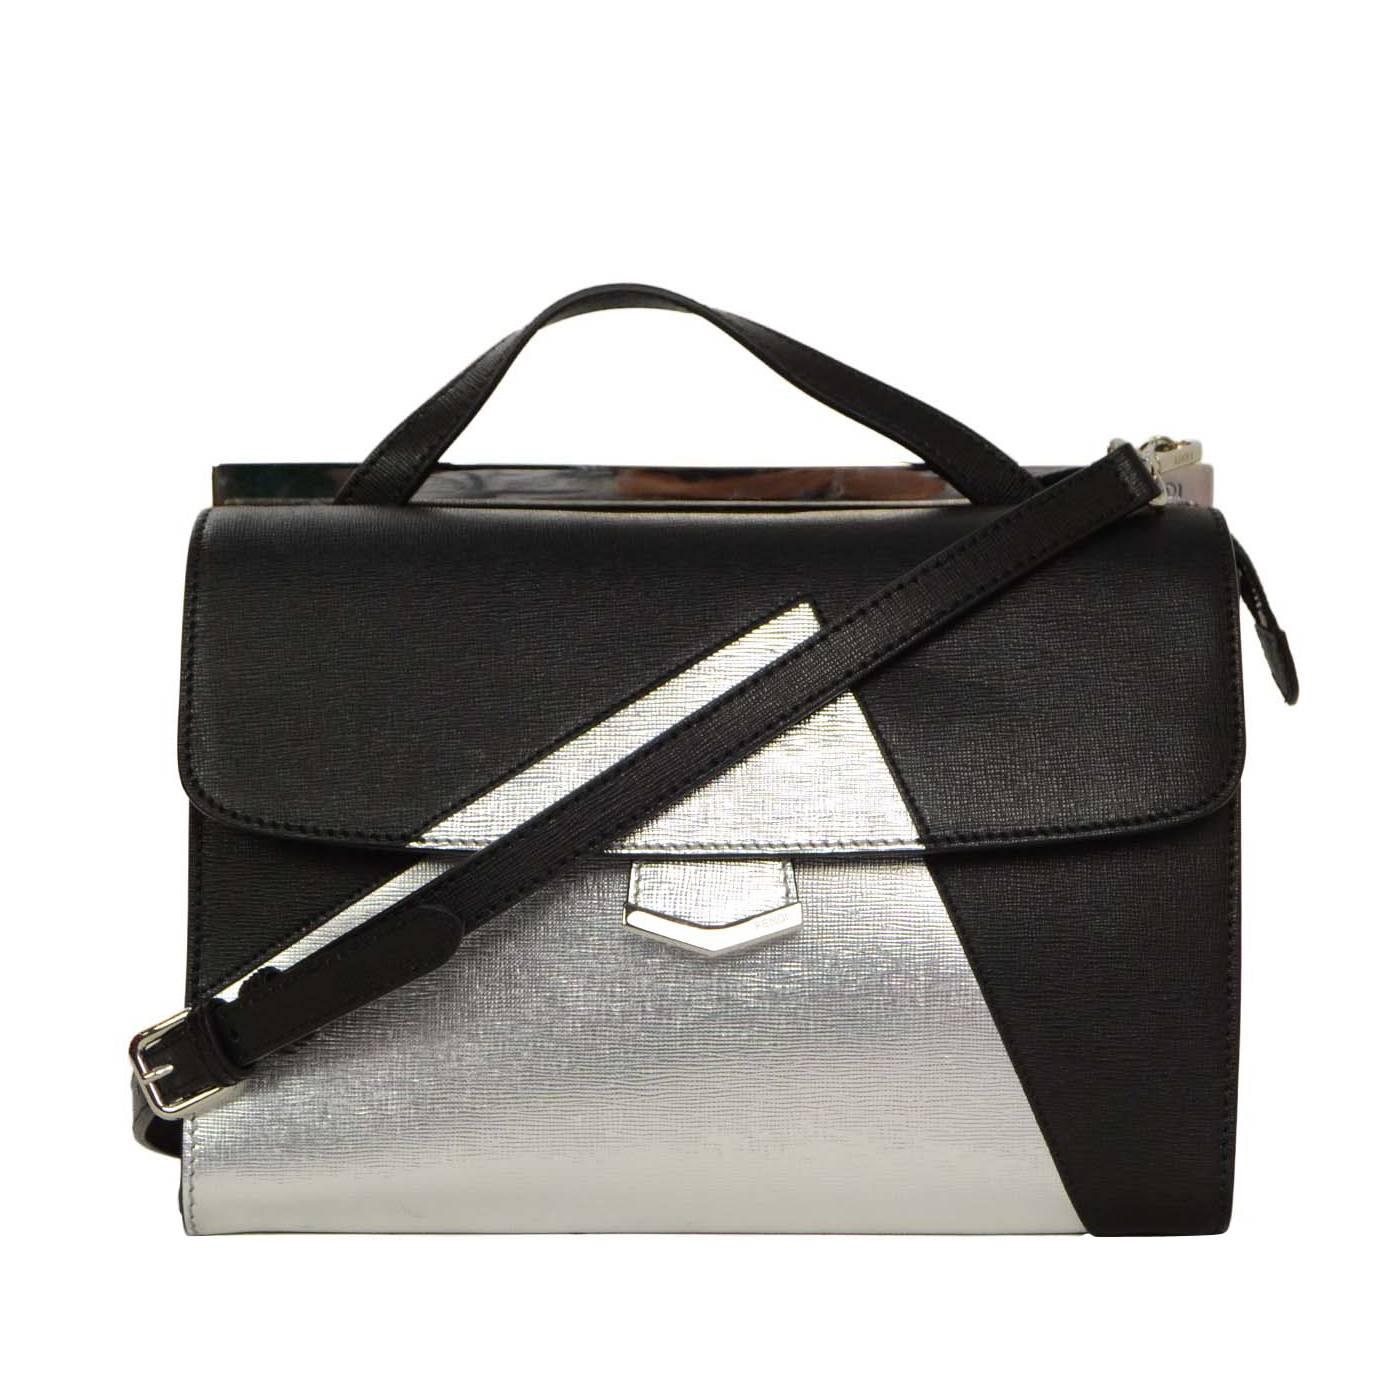 Fendi Black & Silver Textured Leather 'Demijours' Bag SHW rt. $2, 025